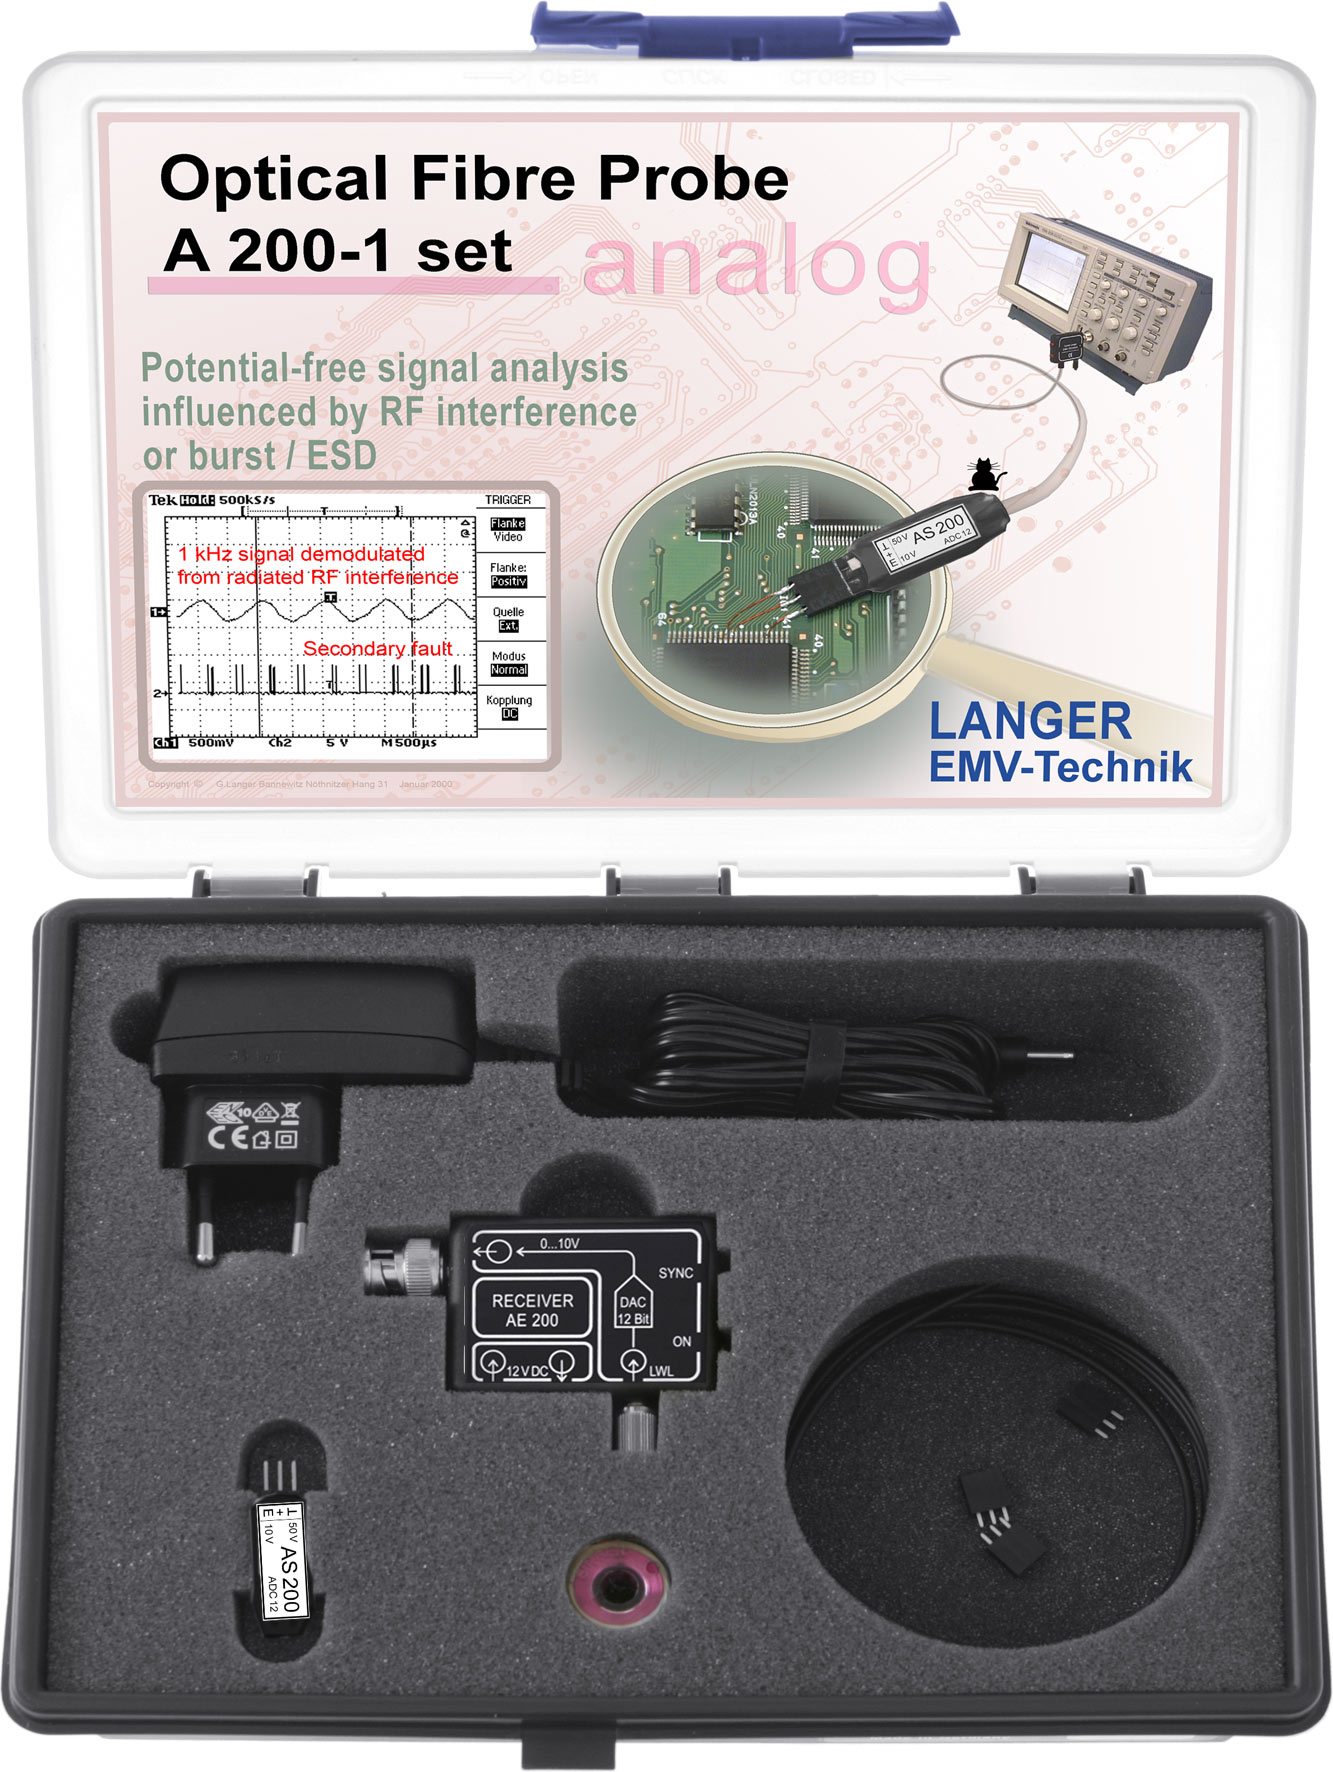 A200-1 set, Optical Fiber Probe 1-channel, 500 kHz